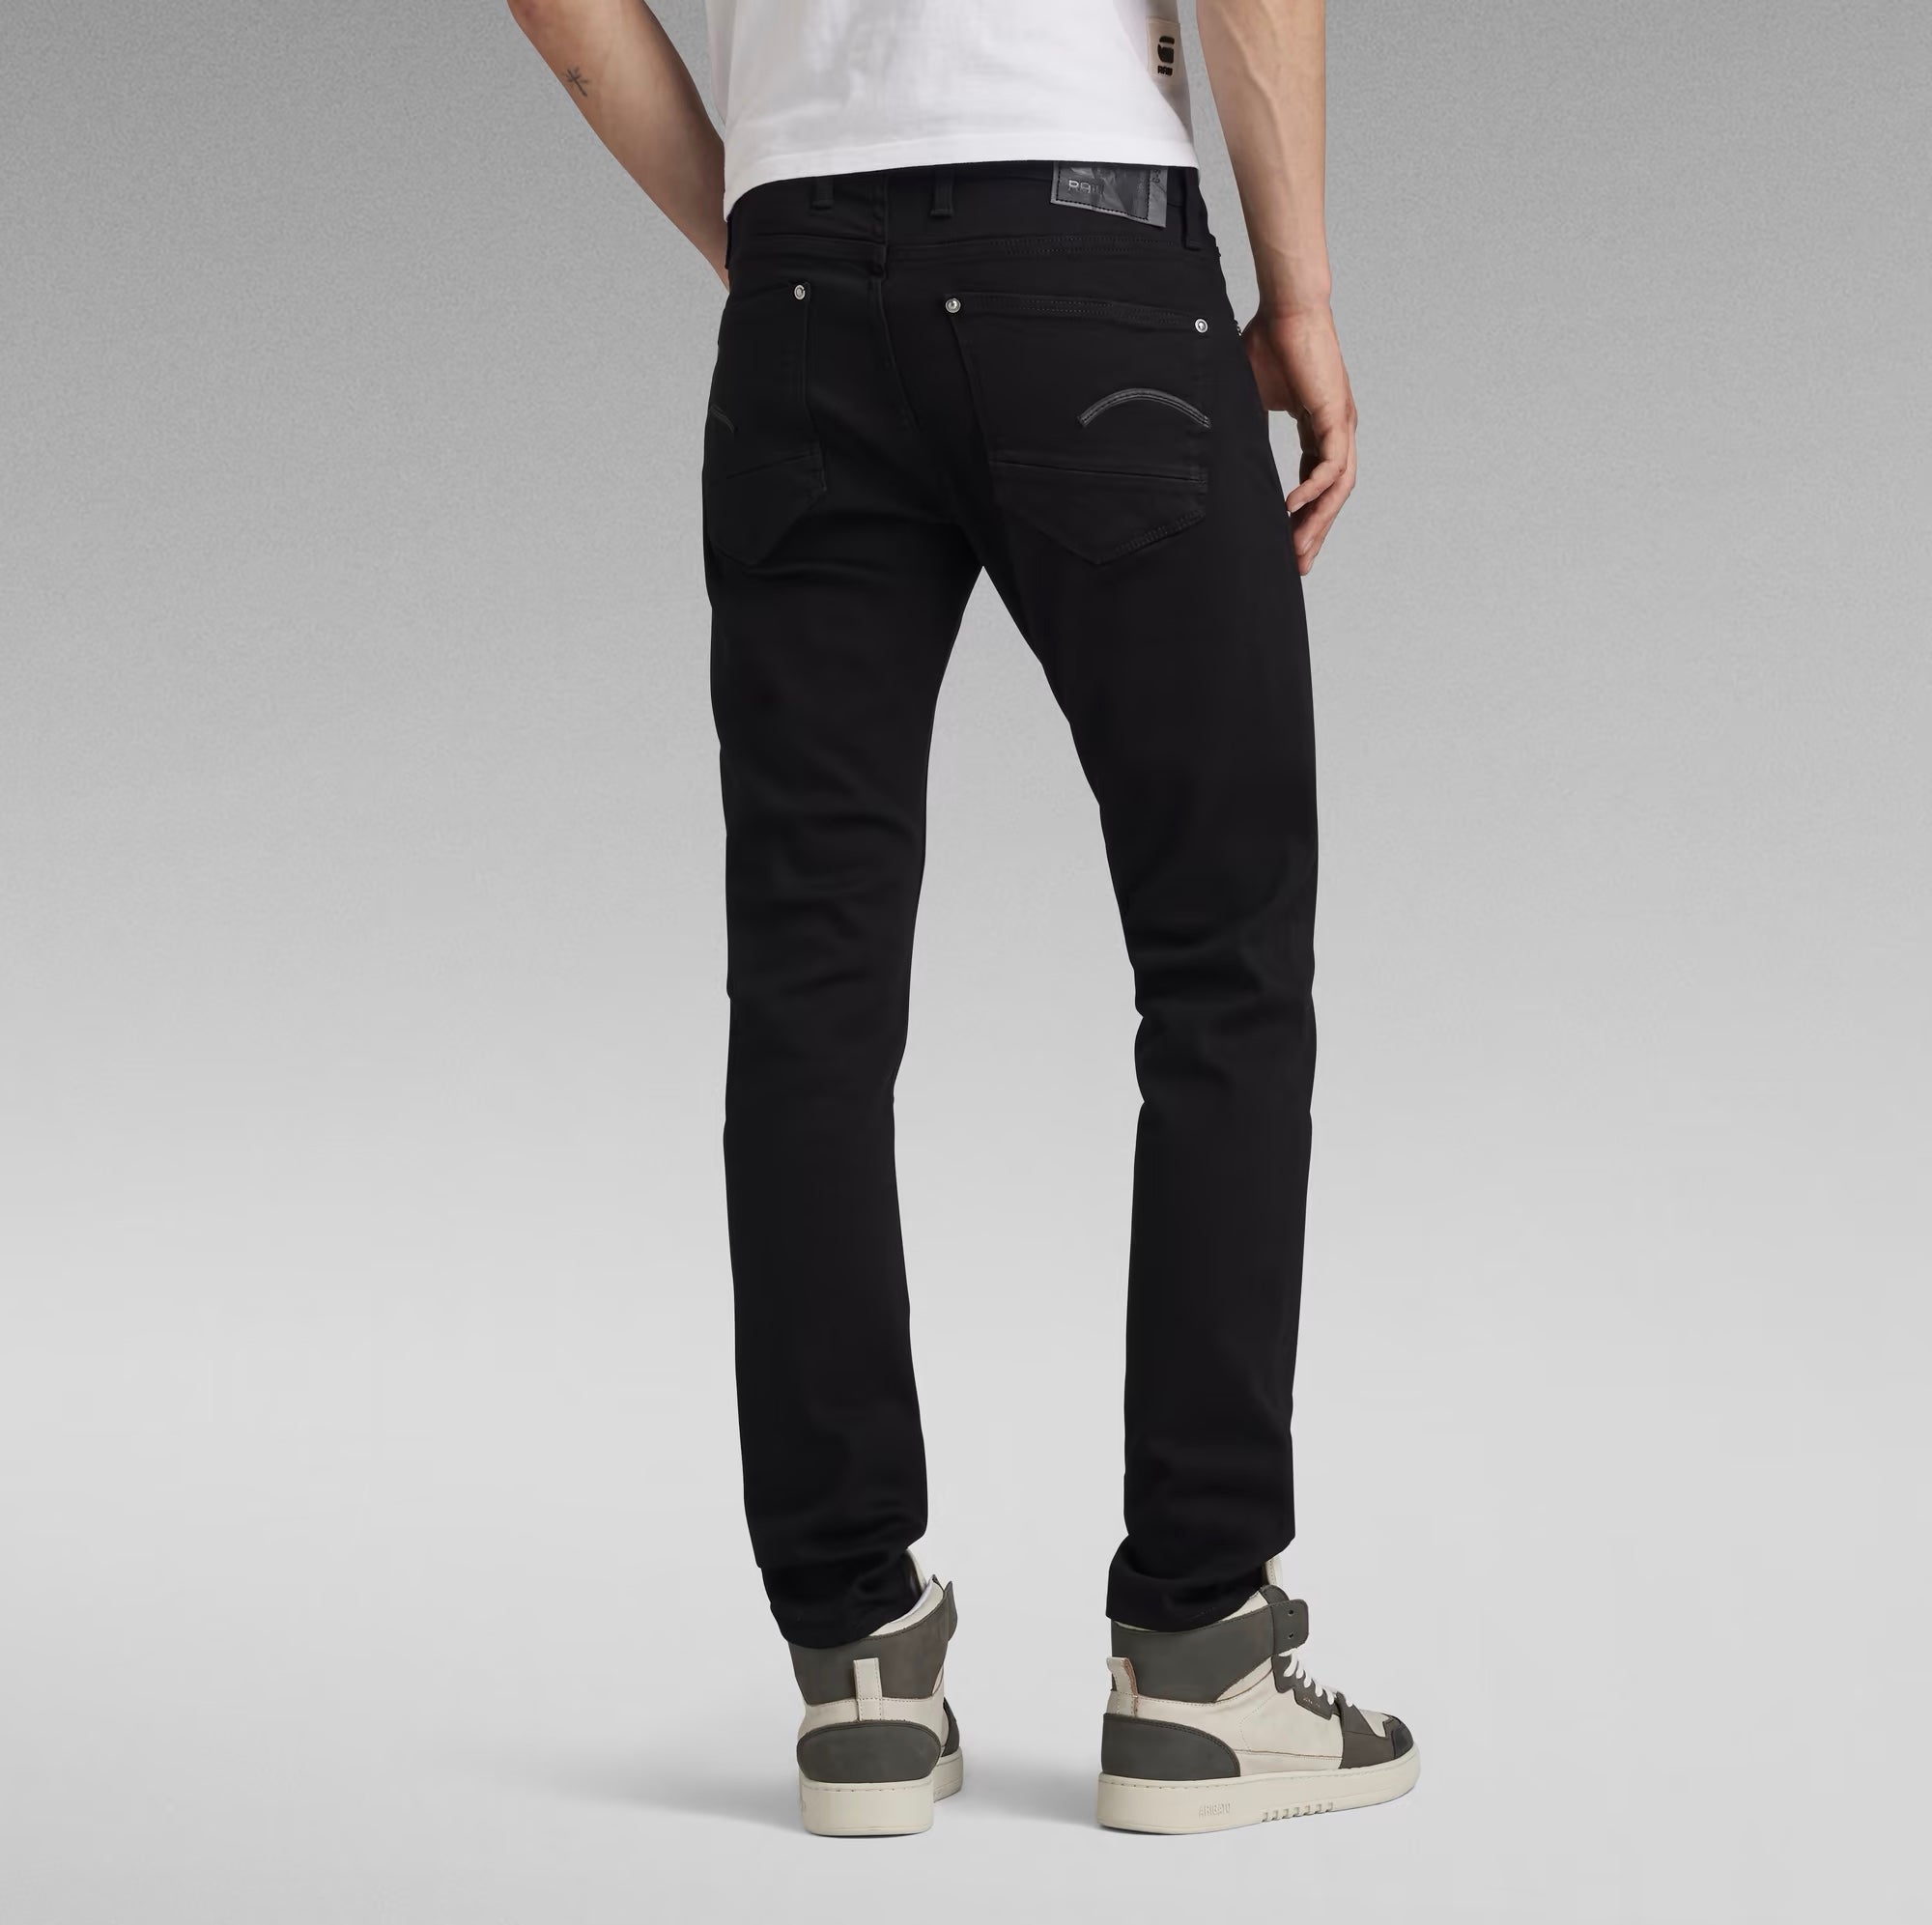 G-Star RAW Men's Revend Skinny Jeans, Black 